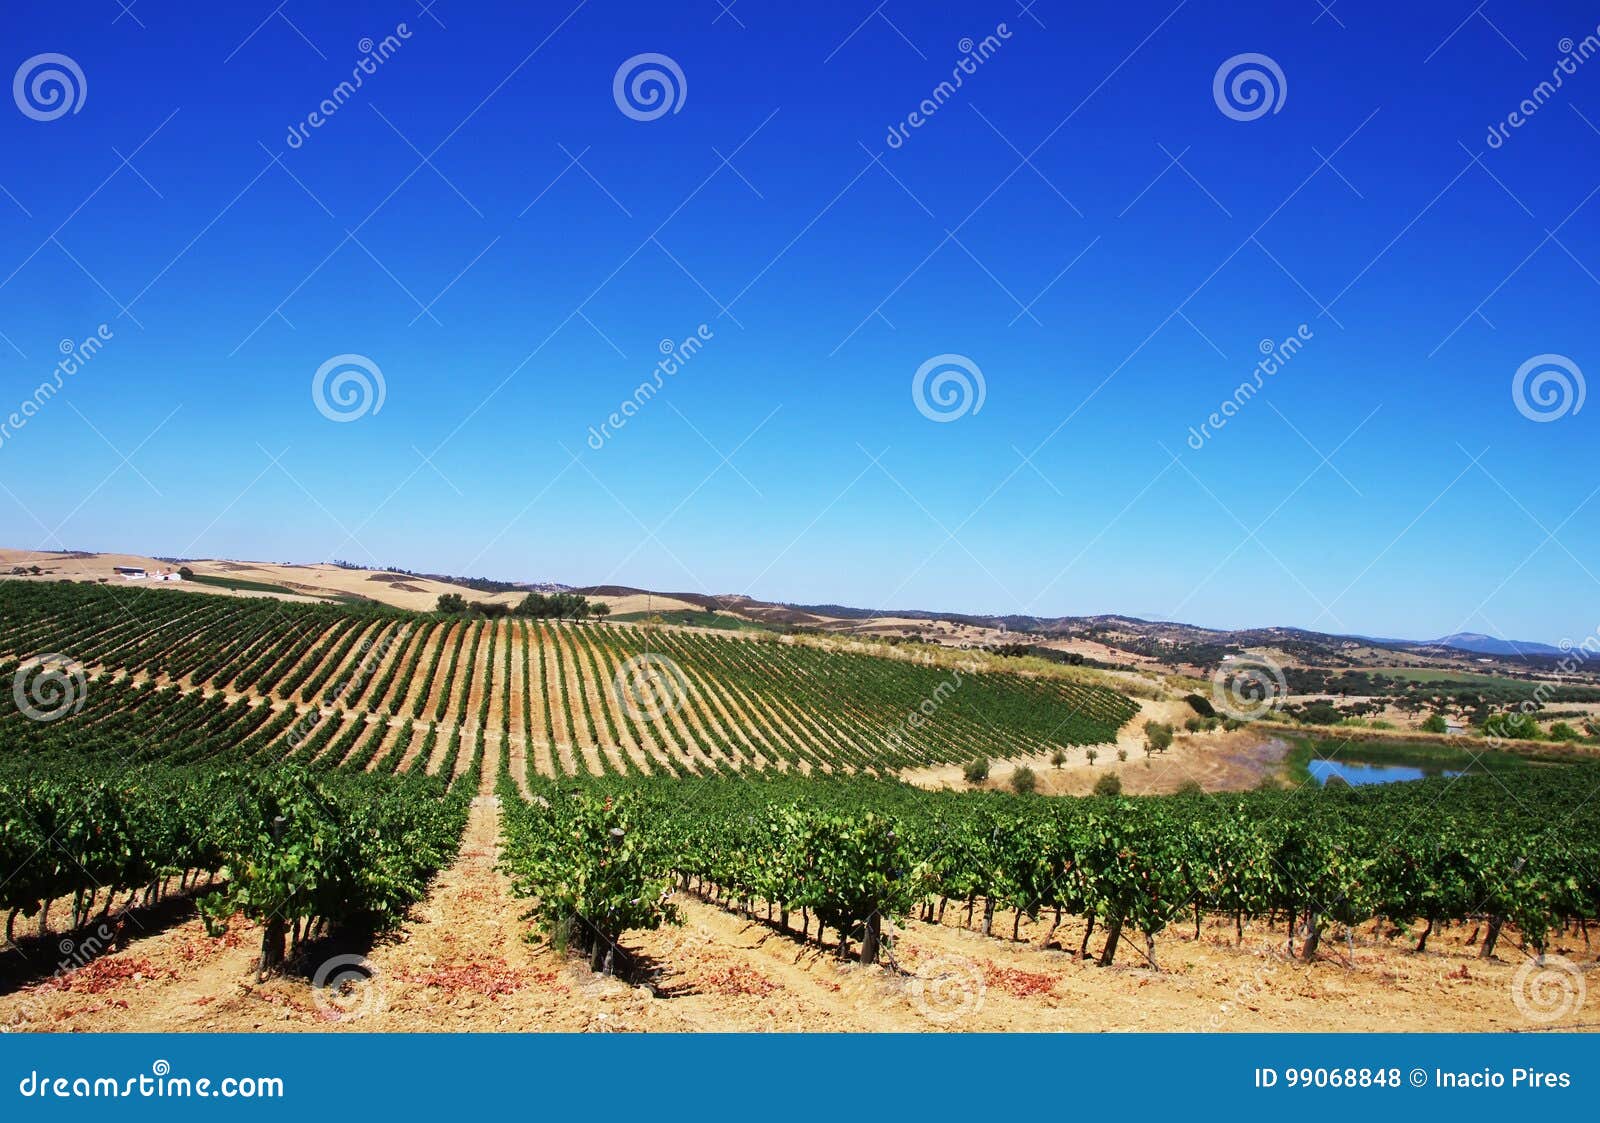 vineyard at alentejo region,portugal.